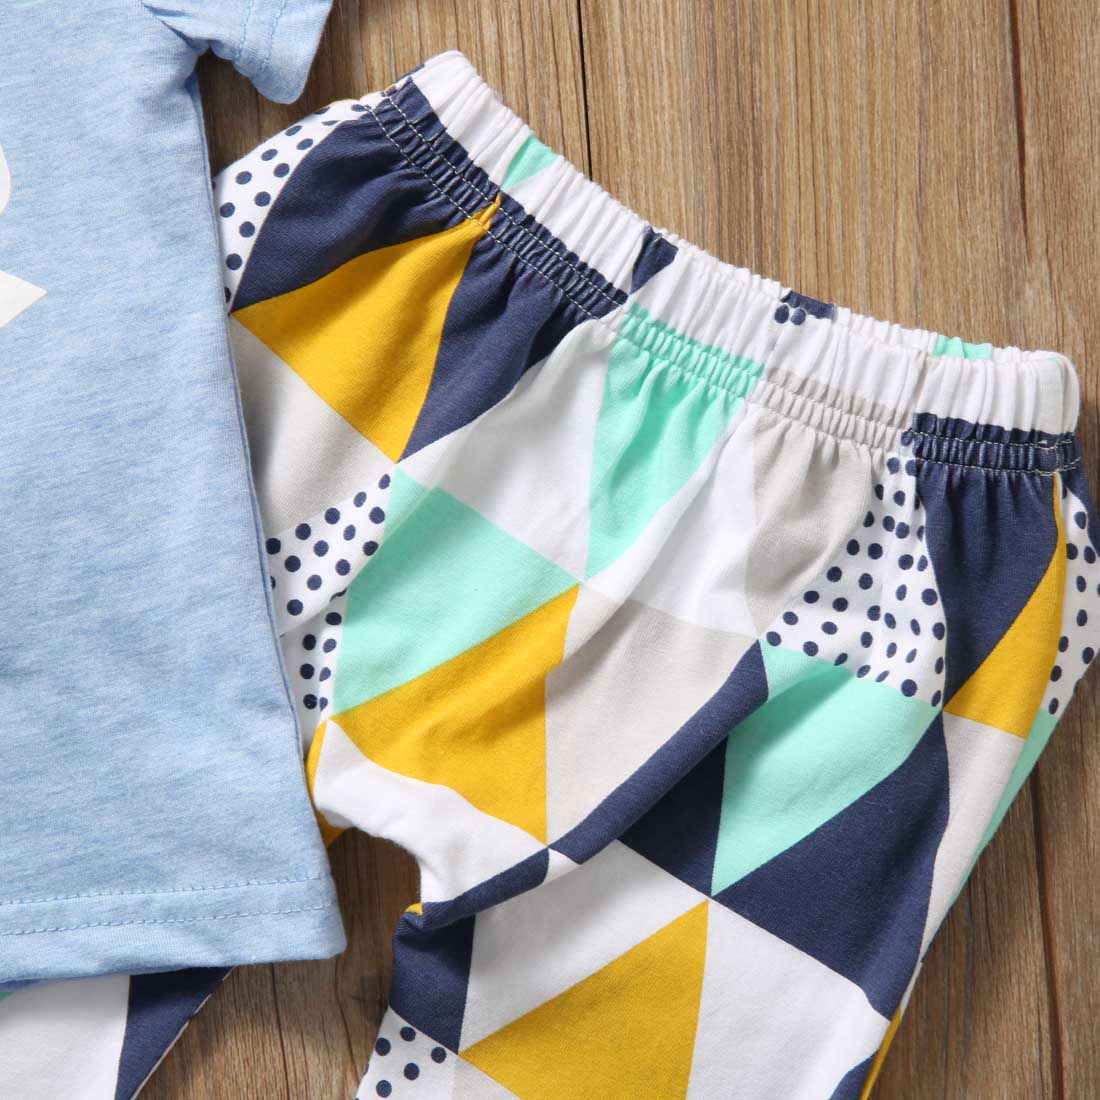 2019 Baby Summer Clothing Newborn Infant Baby Kids Mamas Boy T-shirt Long Pants 2pcs Sets Playsuit Arrow Print Outfits Clothes